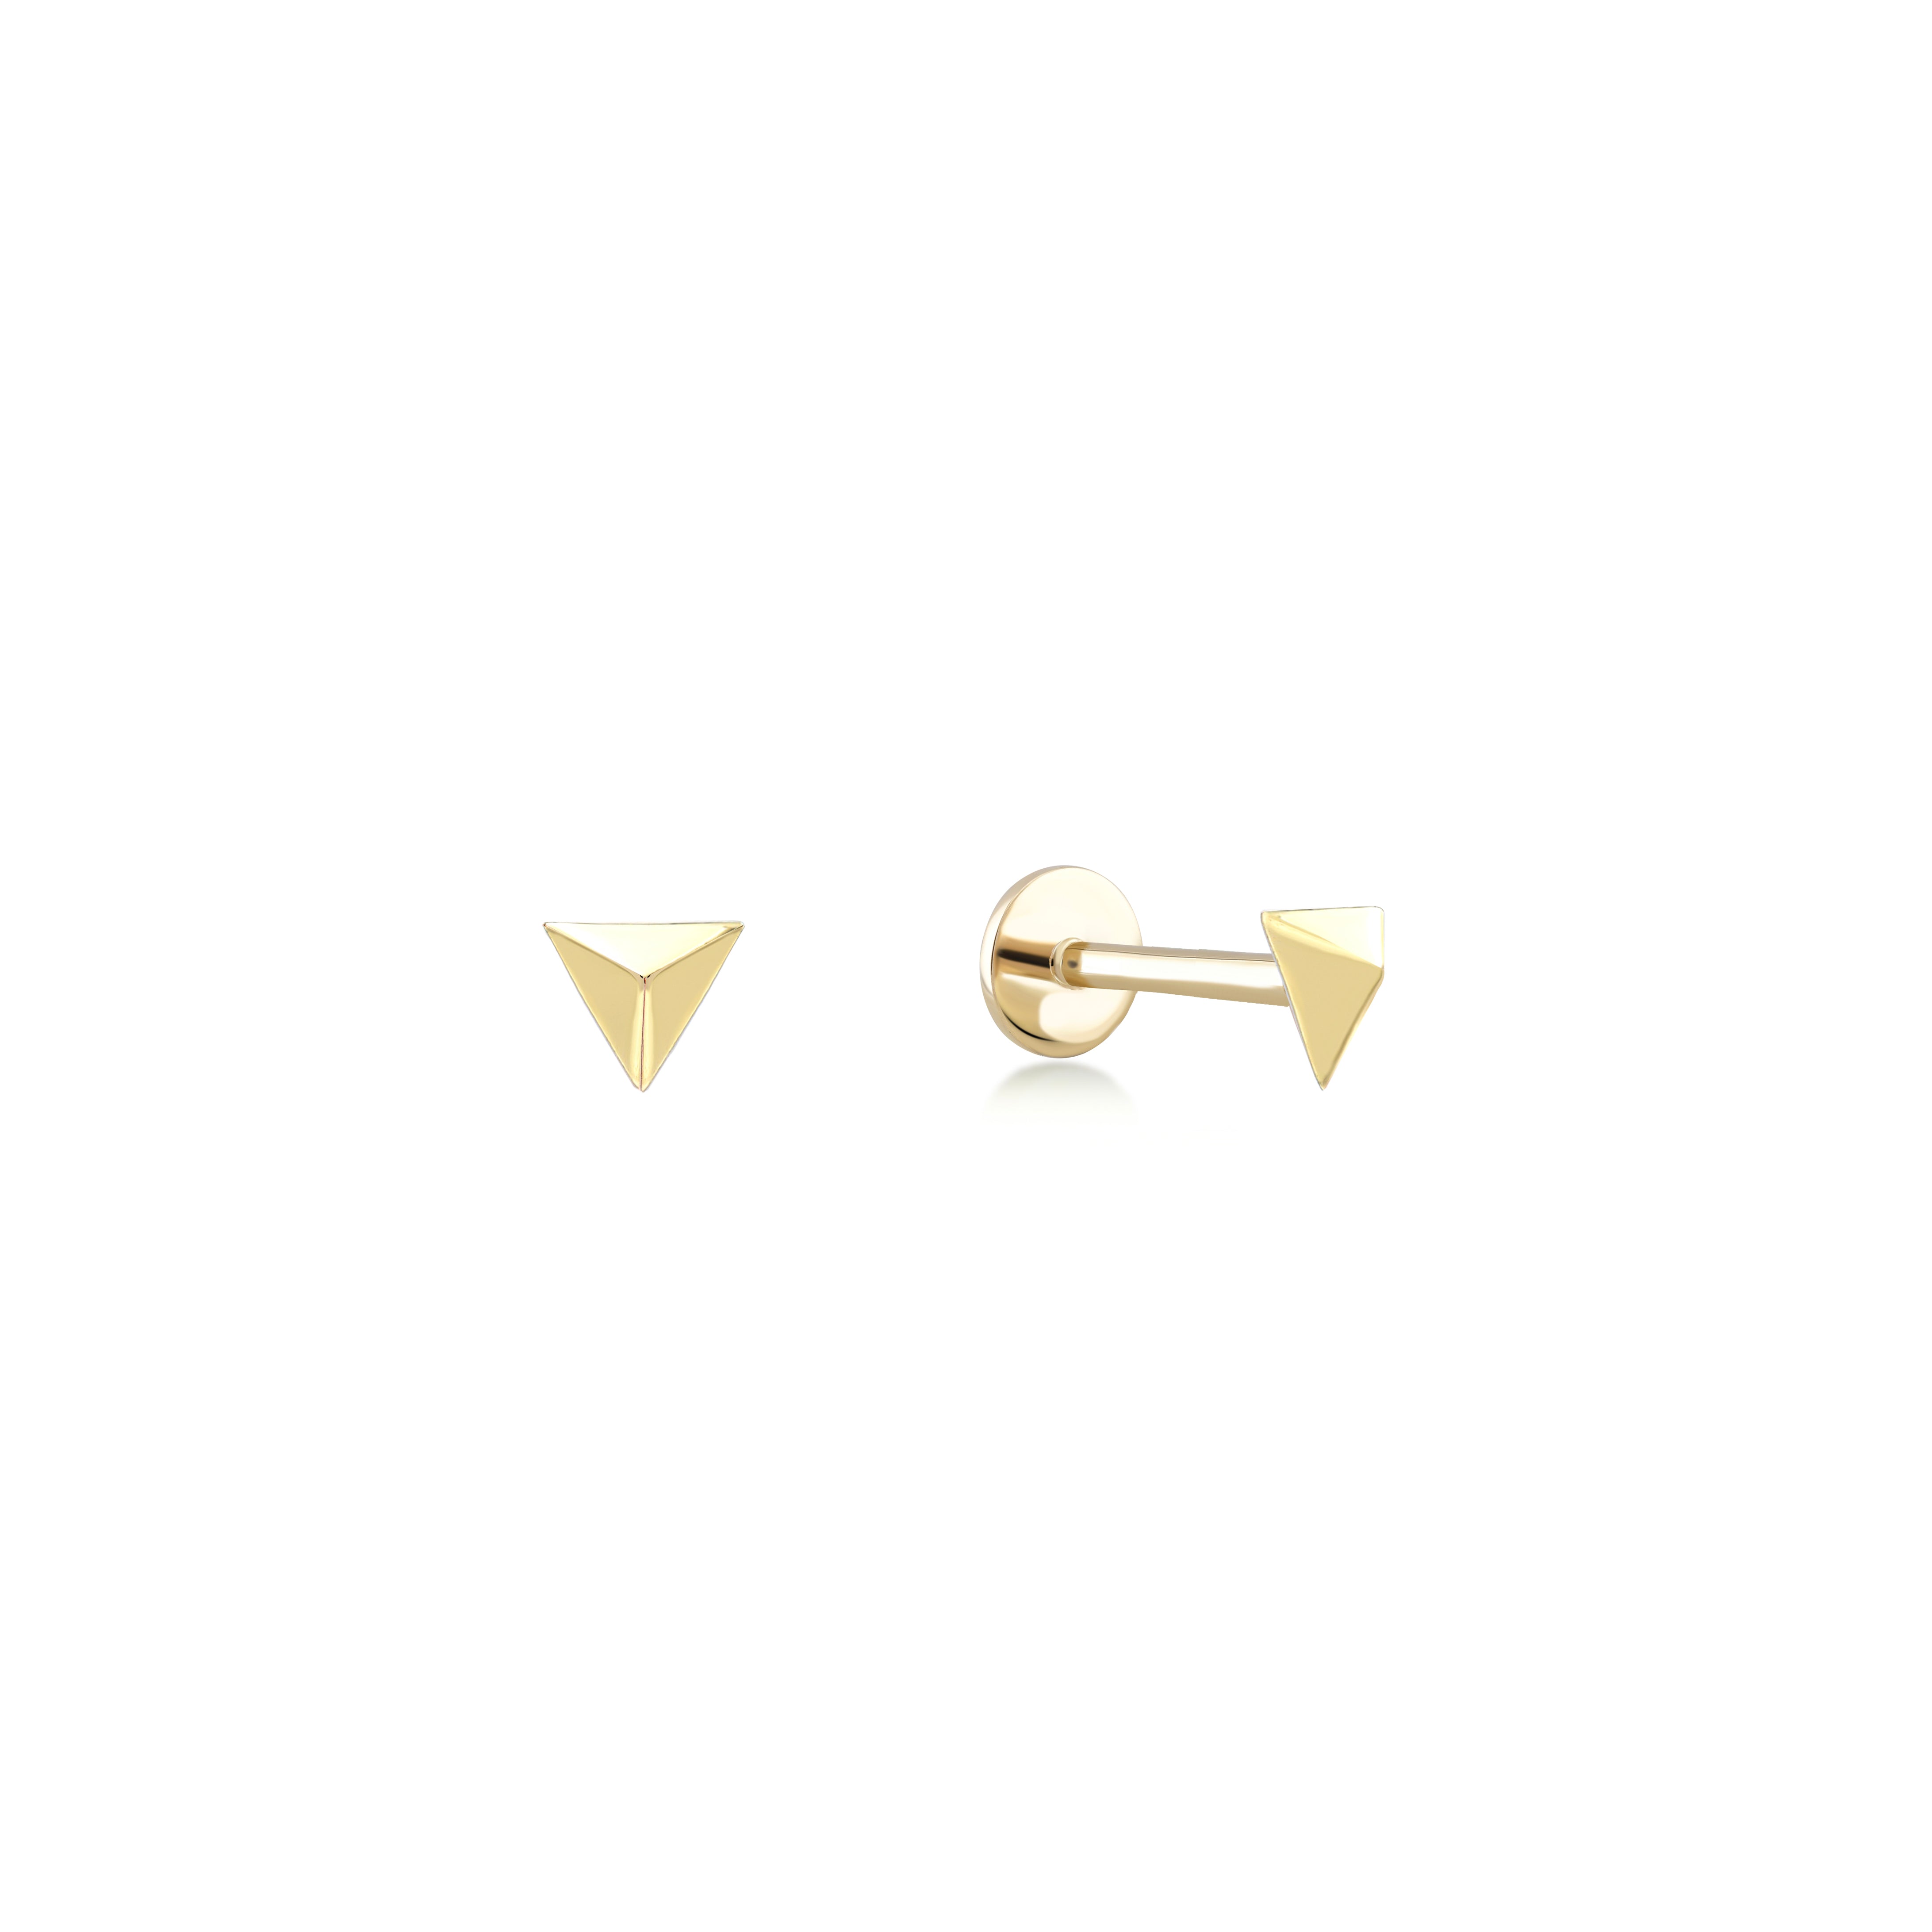 Geometric Apex Stud Earrings in 14K Solid Gold